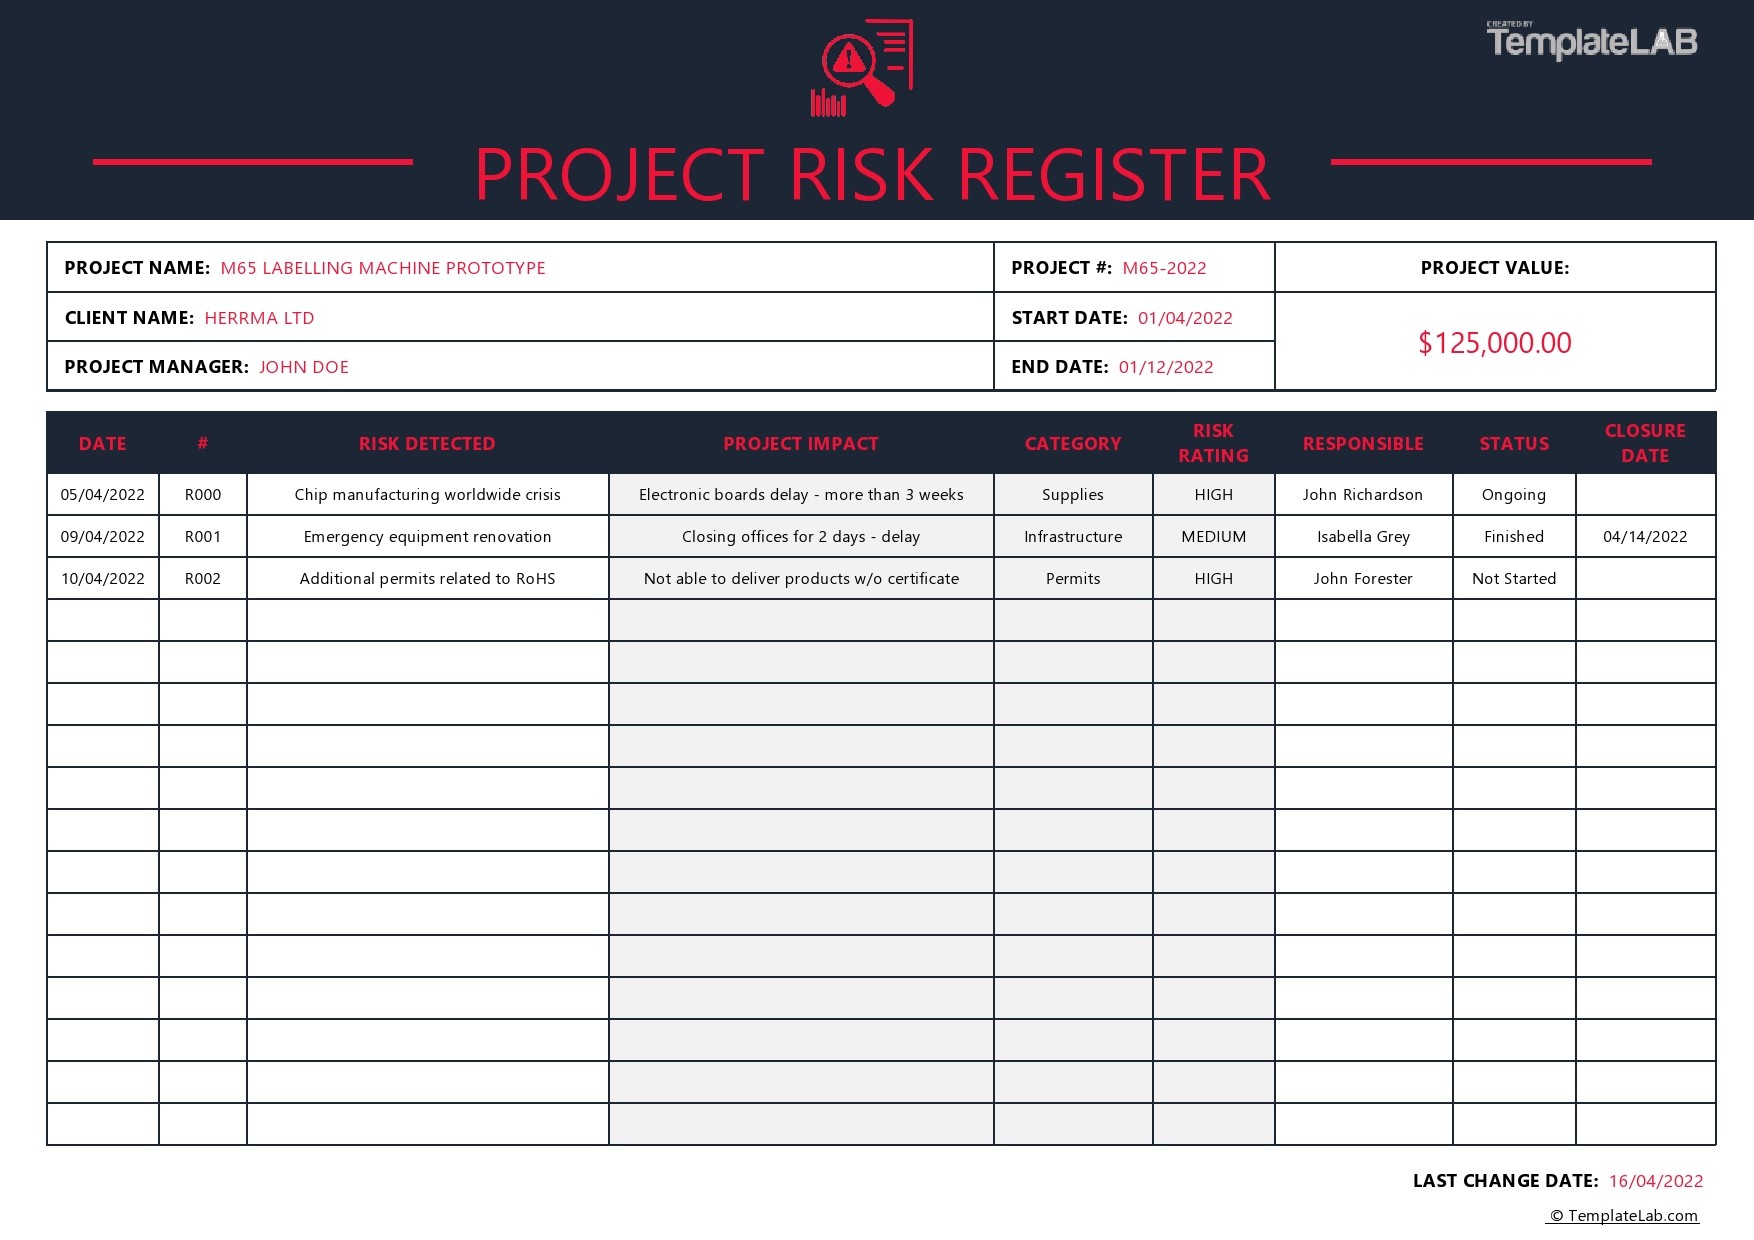 Free Project Risk Register Template - TemplateLab.com